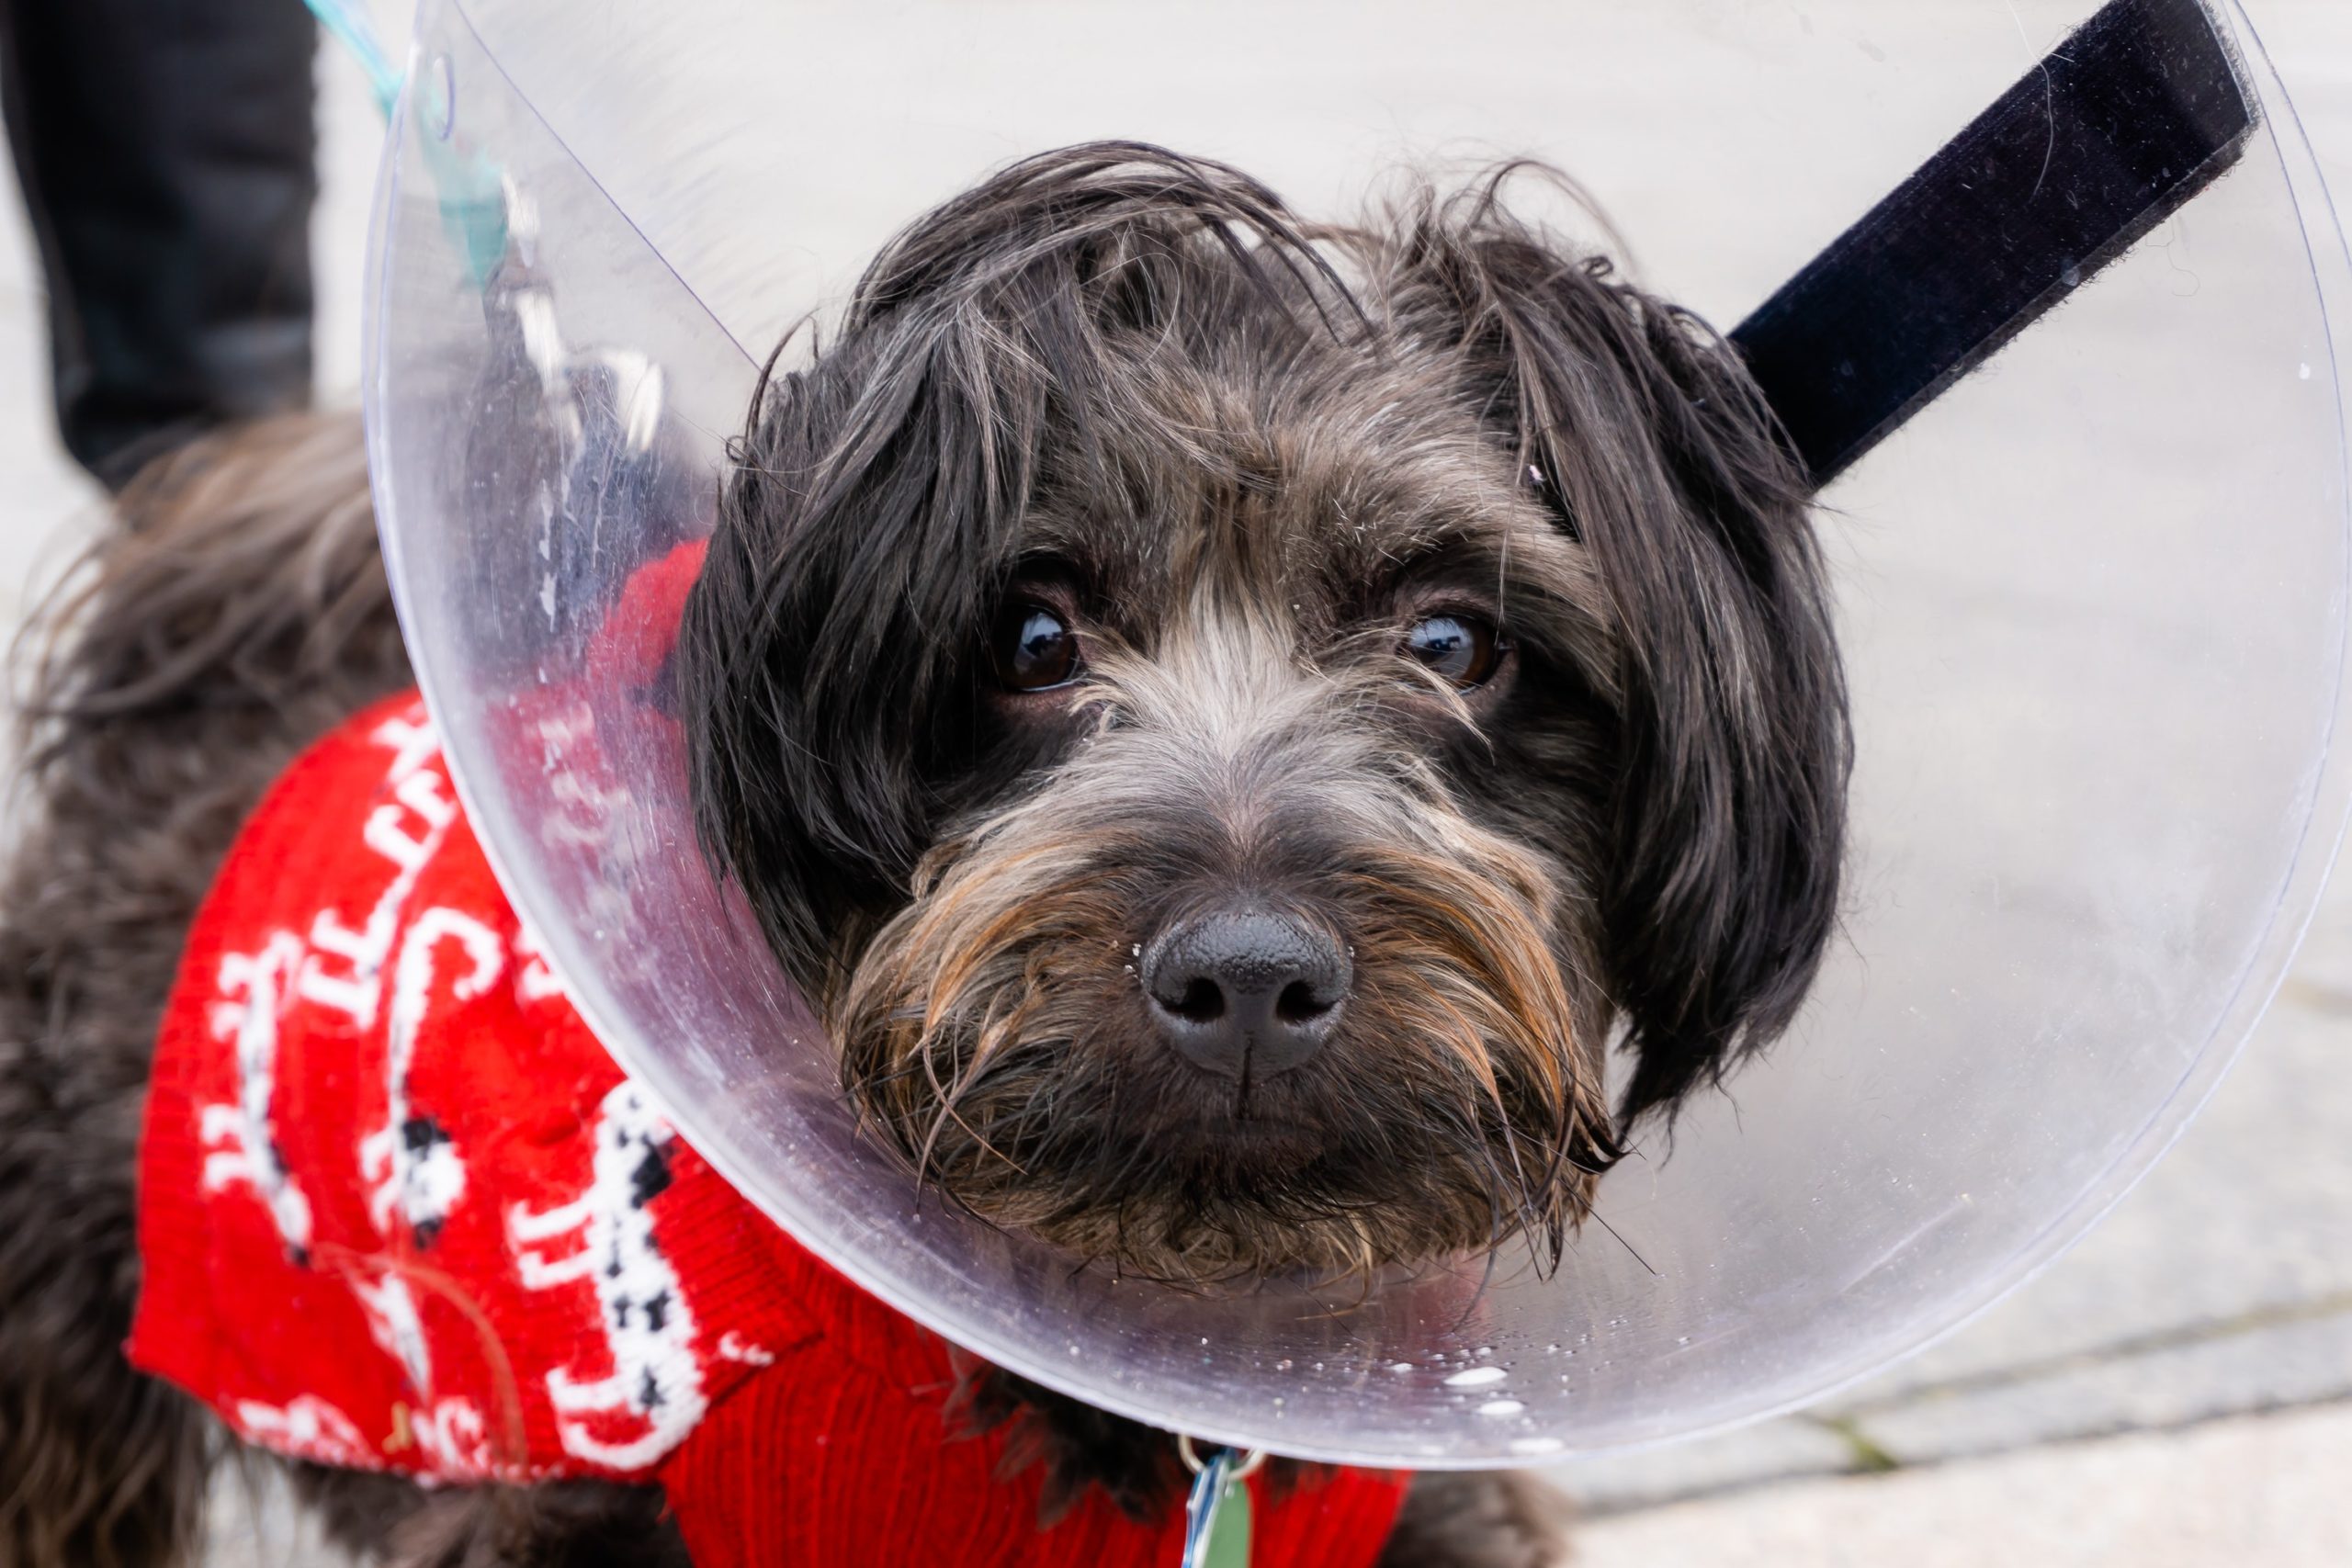 How to make a dog cone: DIY collar of shame